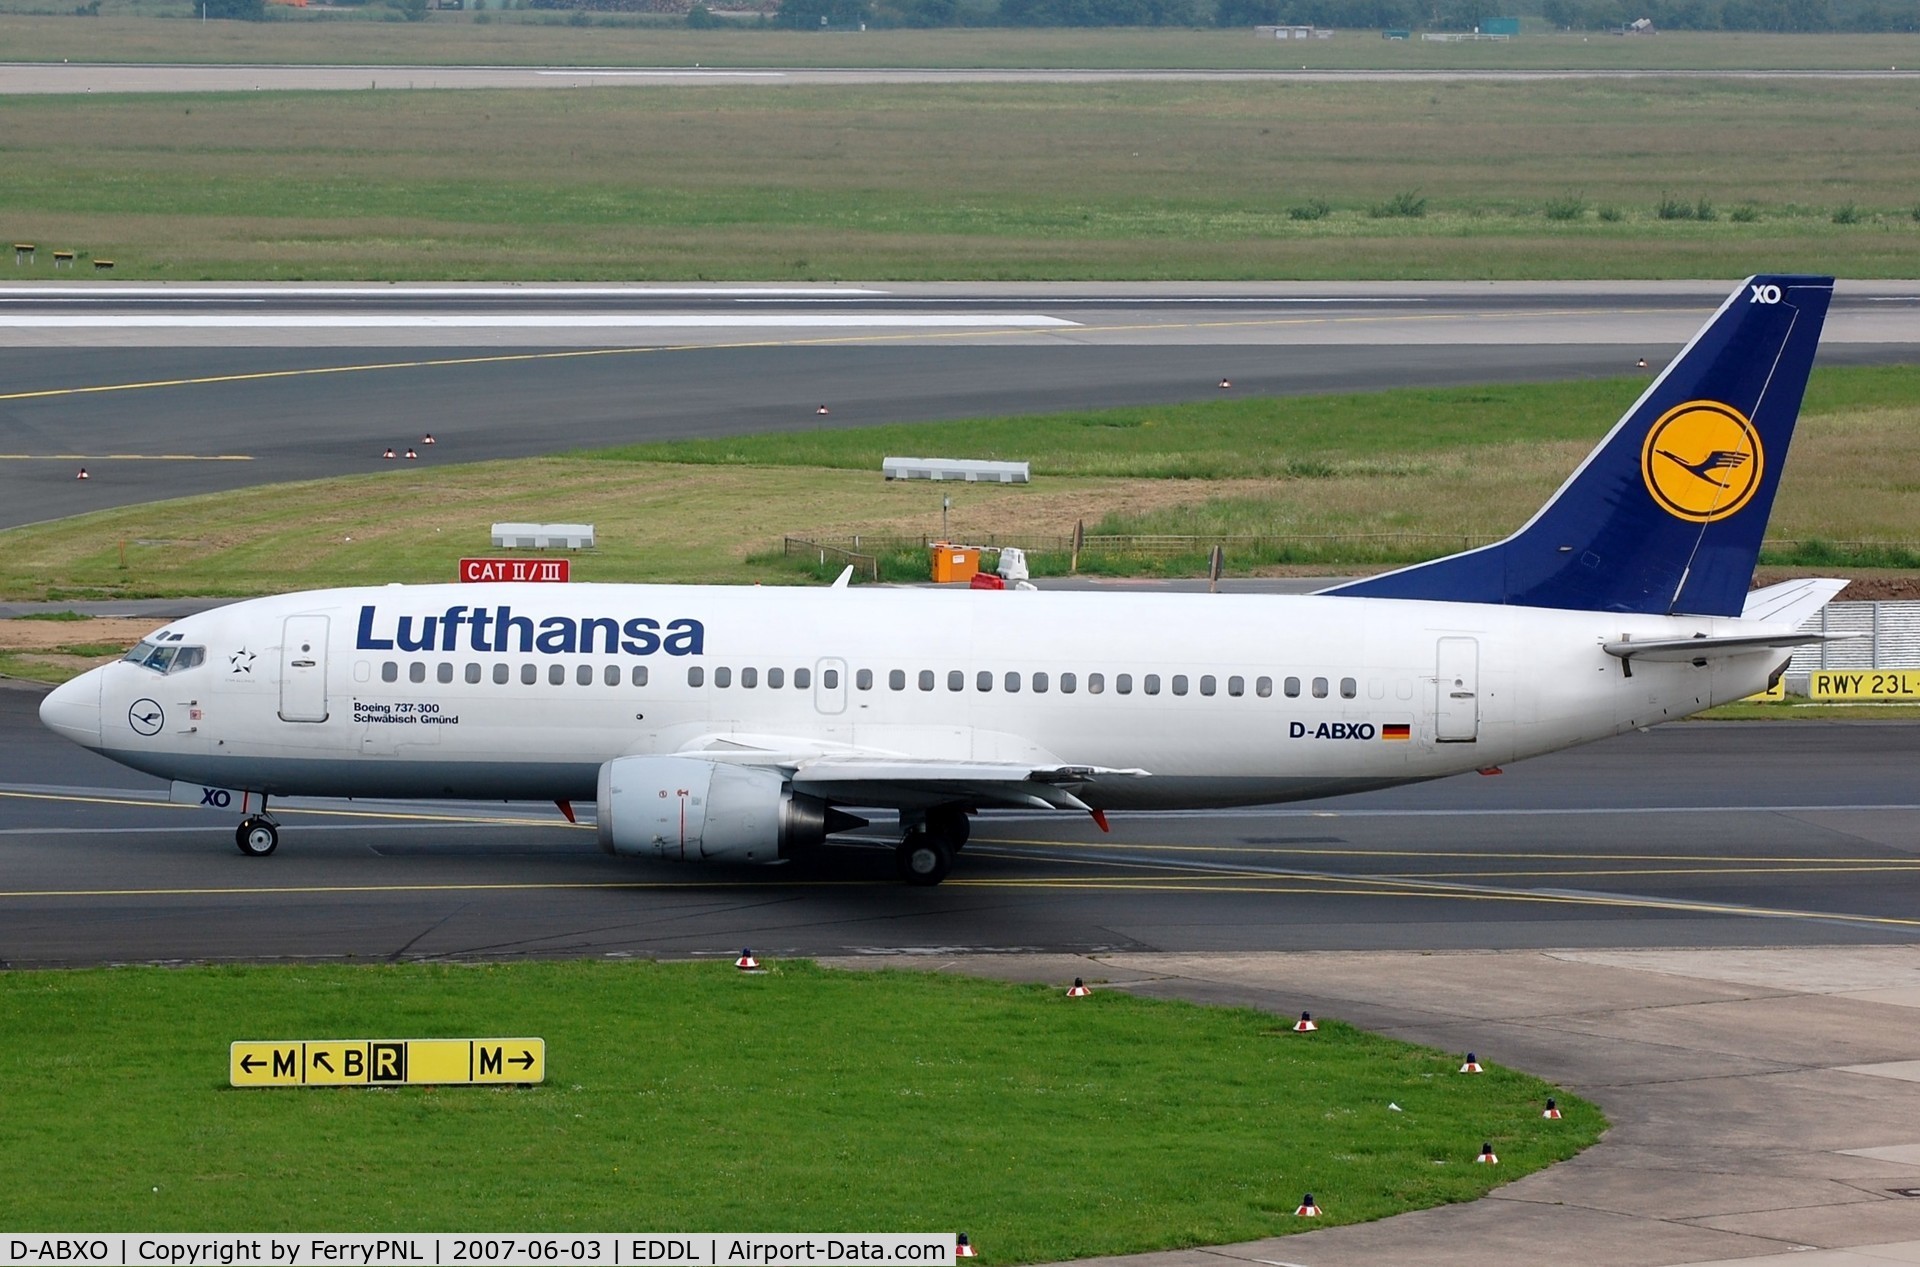 D-ABXO, 1987 Boeing 737-330 C/N 23873, Lufthansa B733 scrapped in 2012